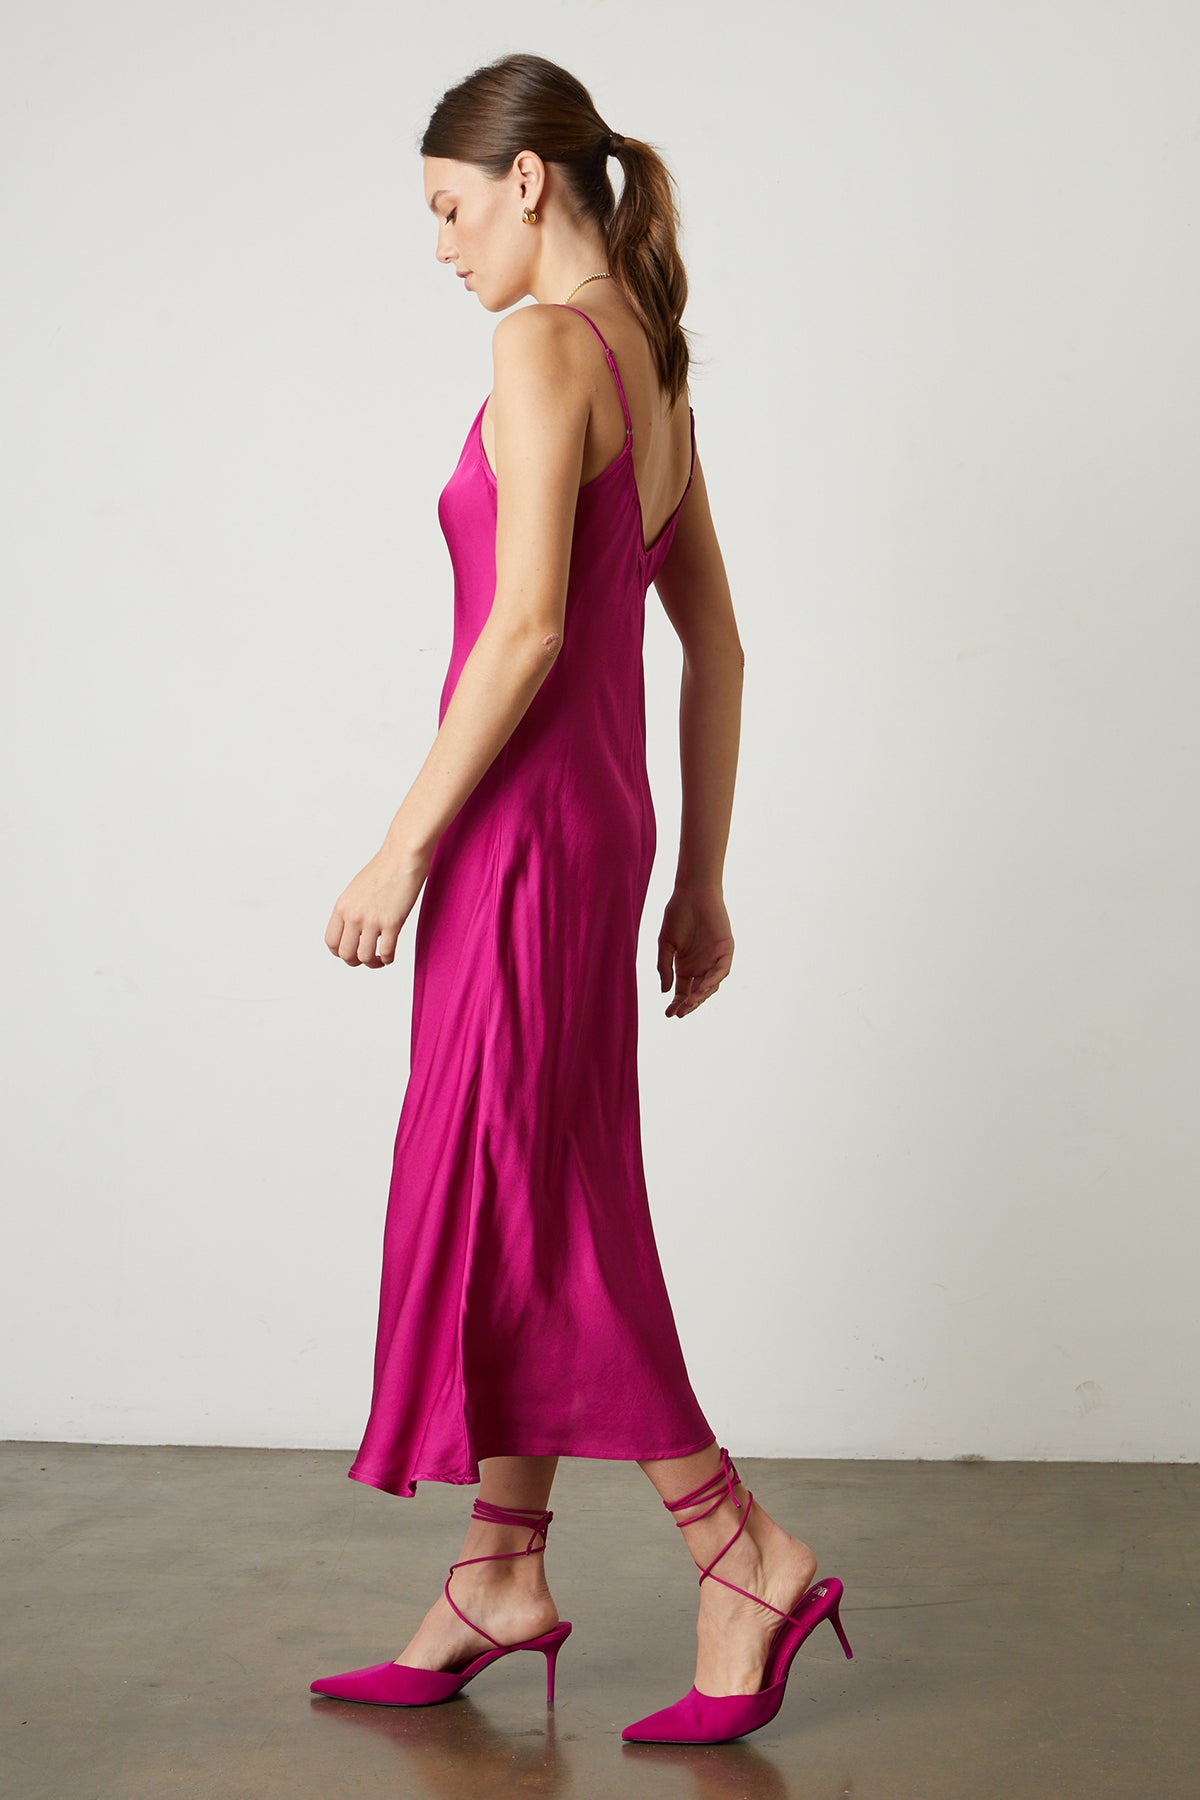 Poppy Satin Slip Dress in bright raspberry pink with matching heels side-25548639535297